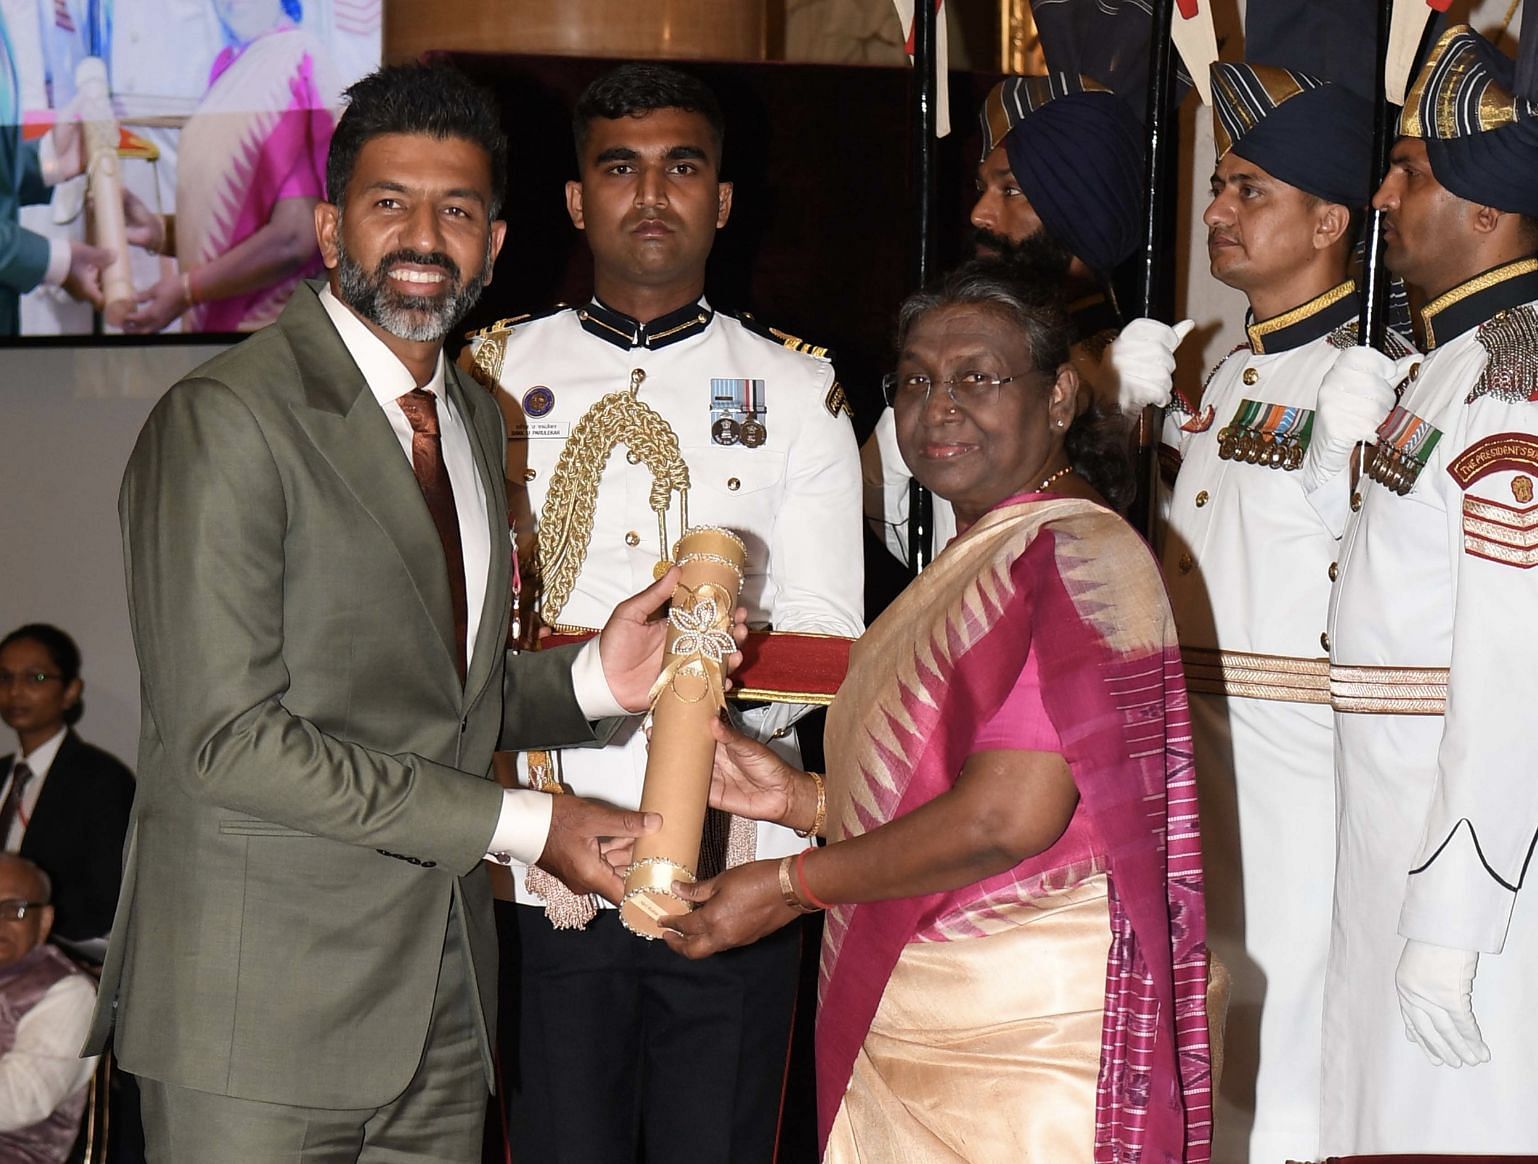 [Watch] Rohan Bopanna receives Padma Shri from president Droupadi Murmu